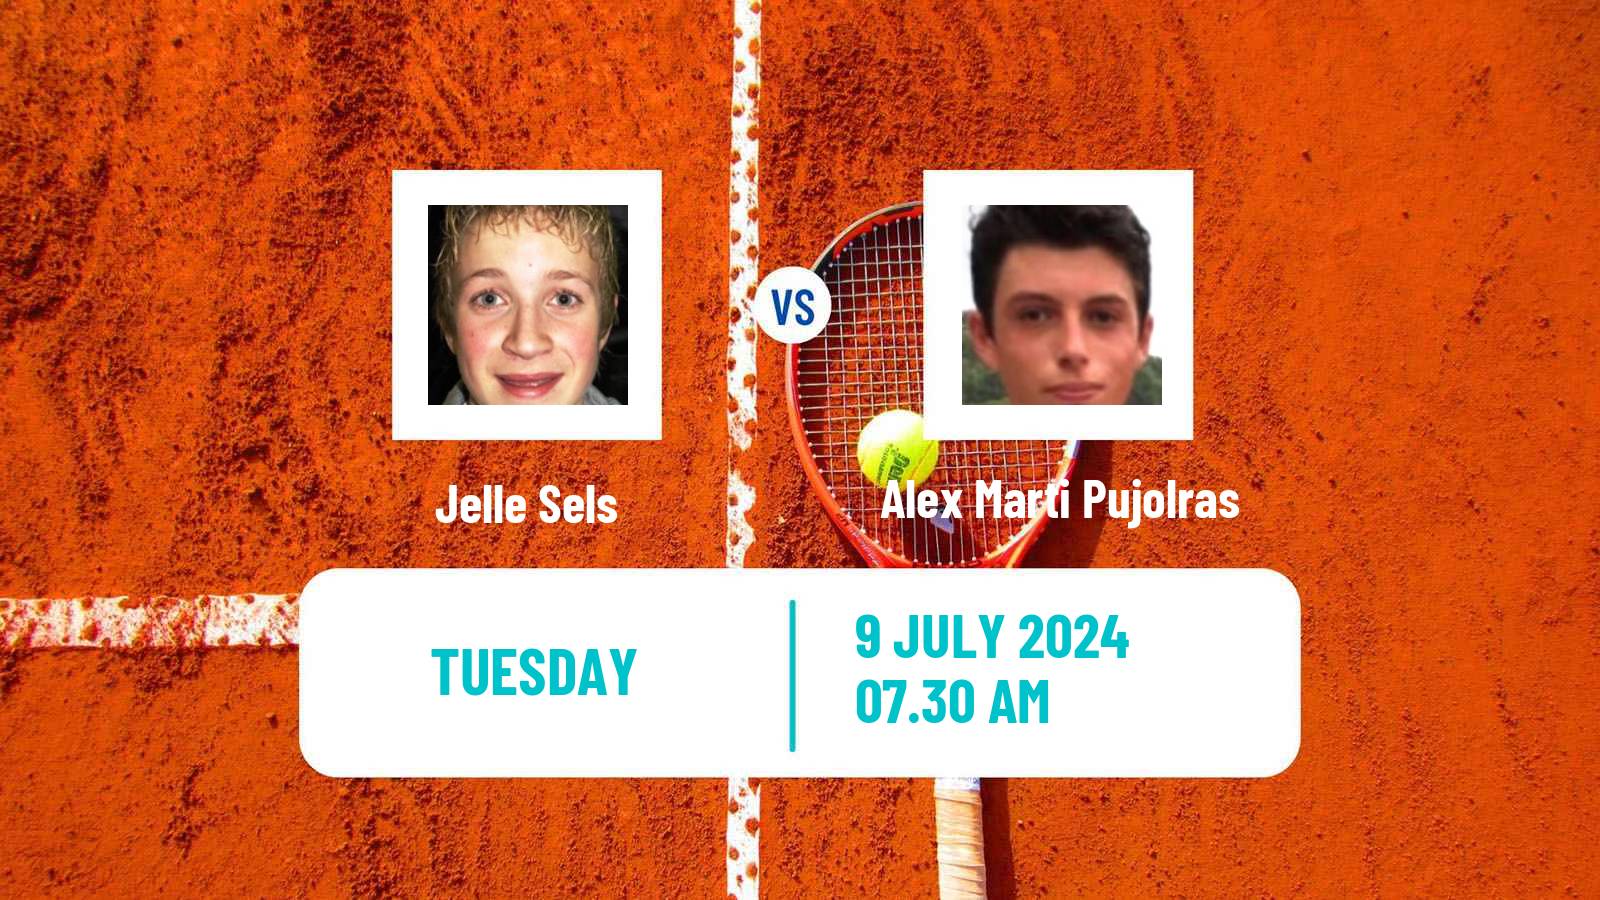 Tennis ITF M25 The Hague Men Jelle Sels - Alex Marti Pujolras